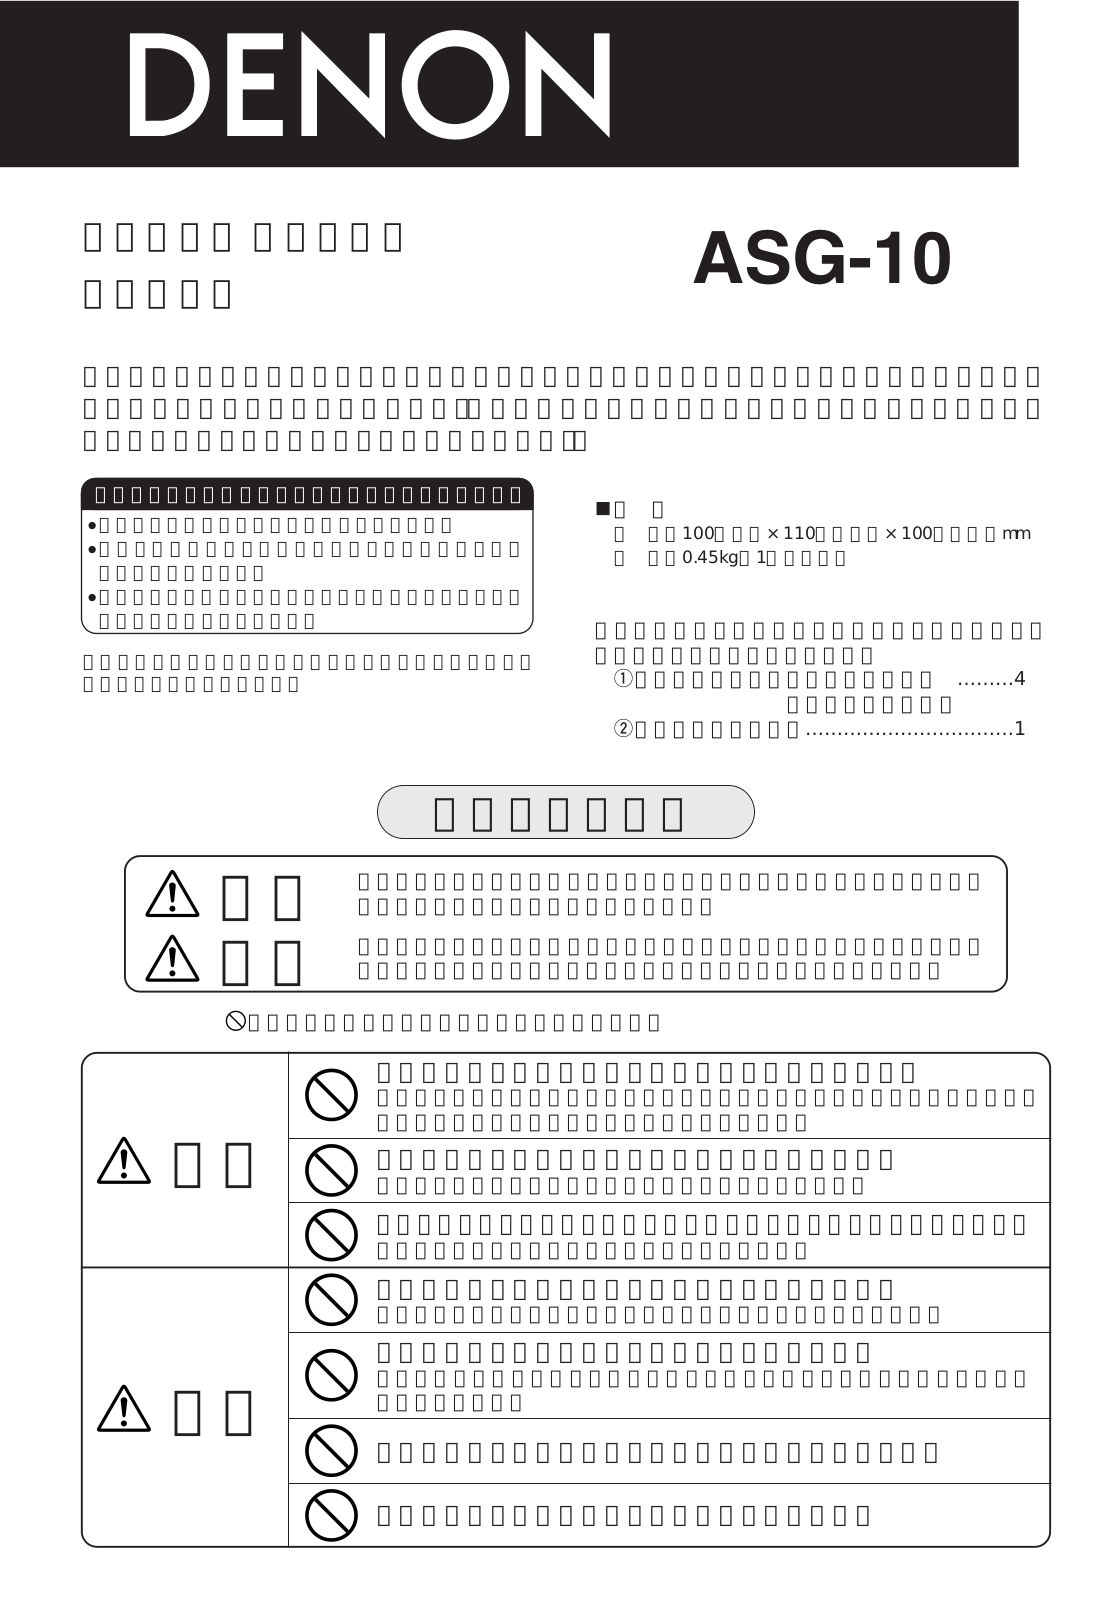 Denon ASG-10 Owner's Manual